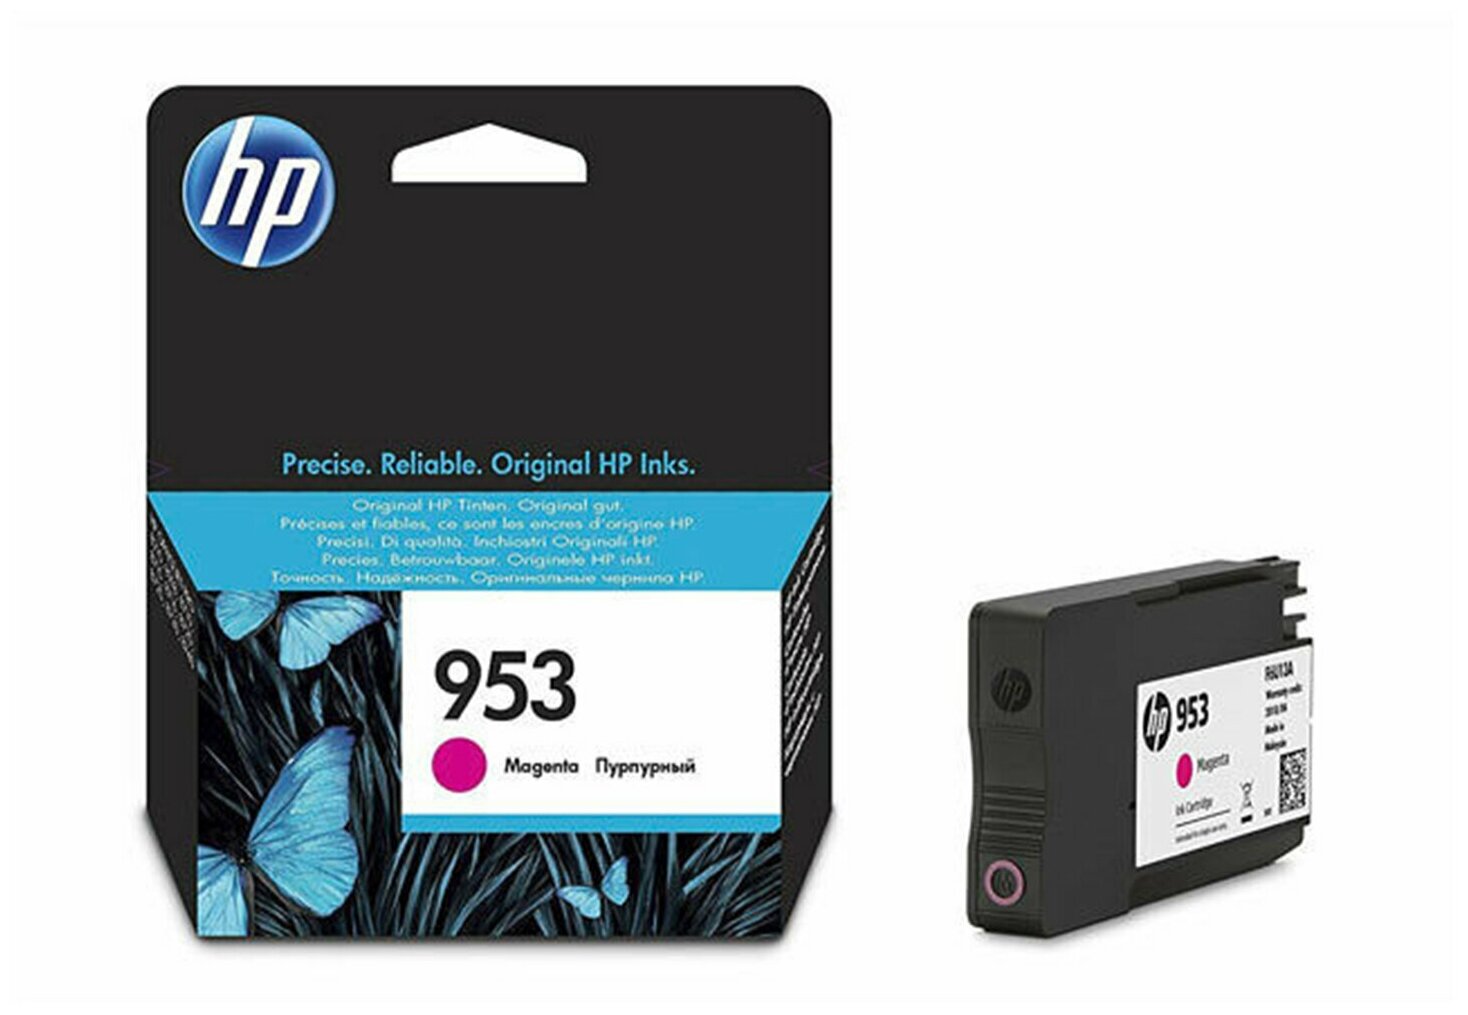 Картридж HP F6U13AE для HP OfficeJet 8710/8715/8720/8725/8730/7740 700стр Пурпурный